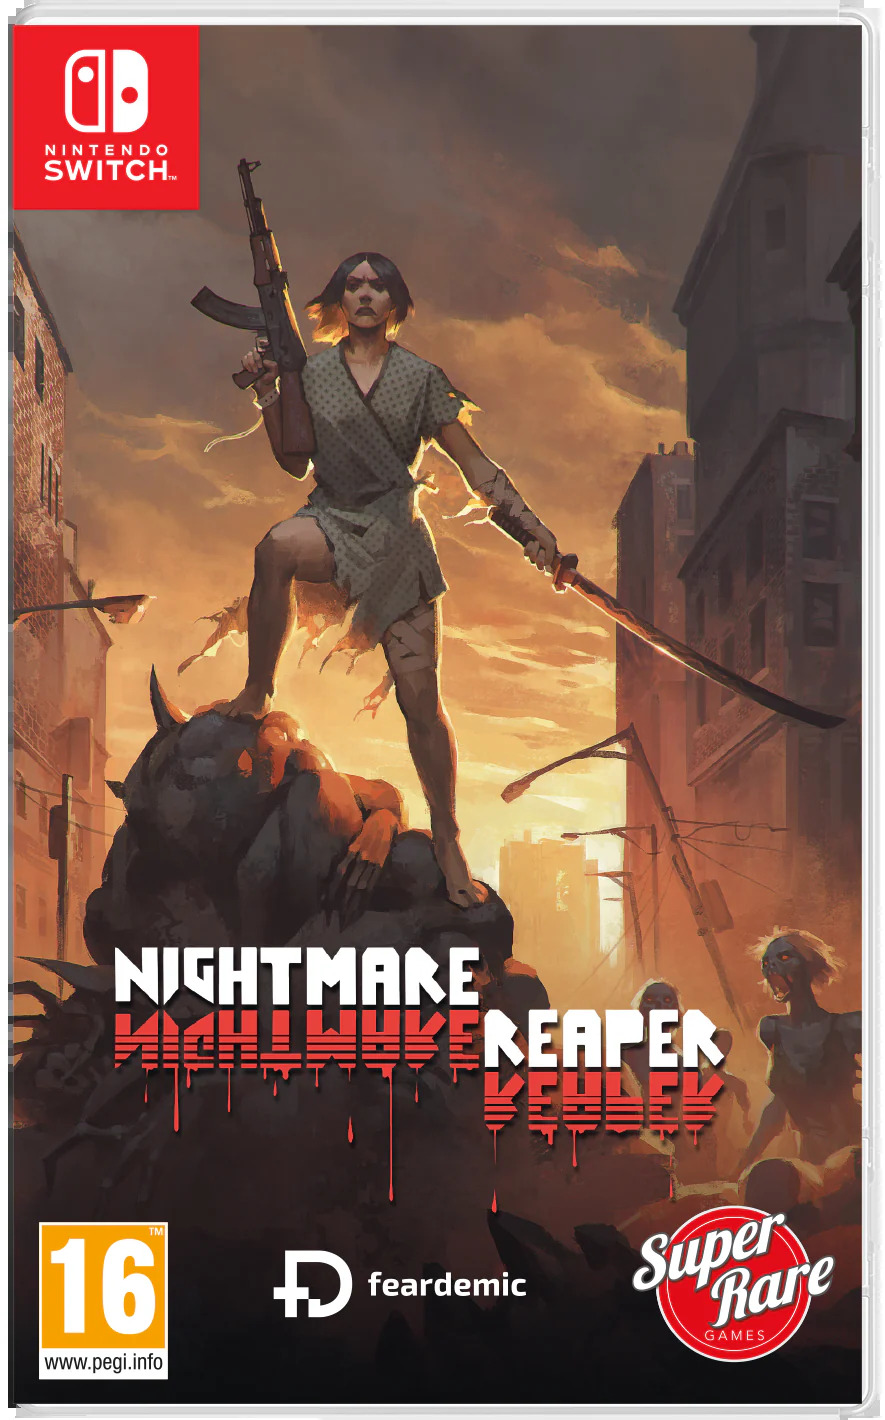 复古射击游戏Nightmare Reaper将登陆NS实体店